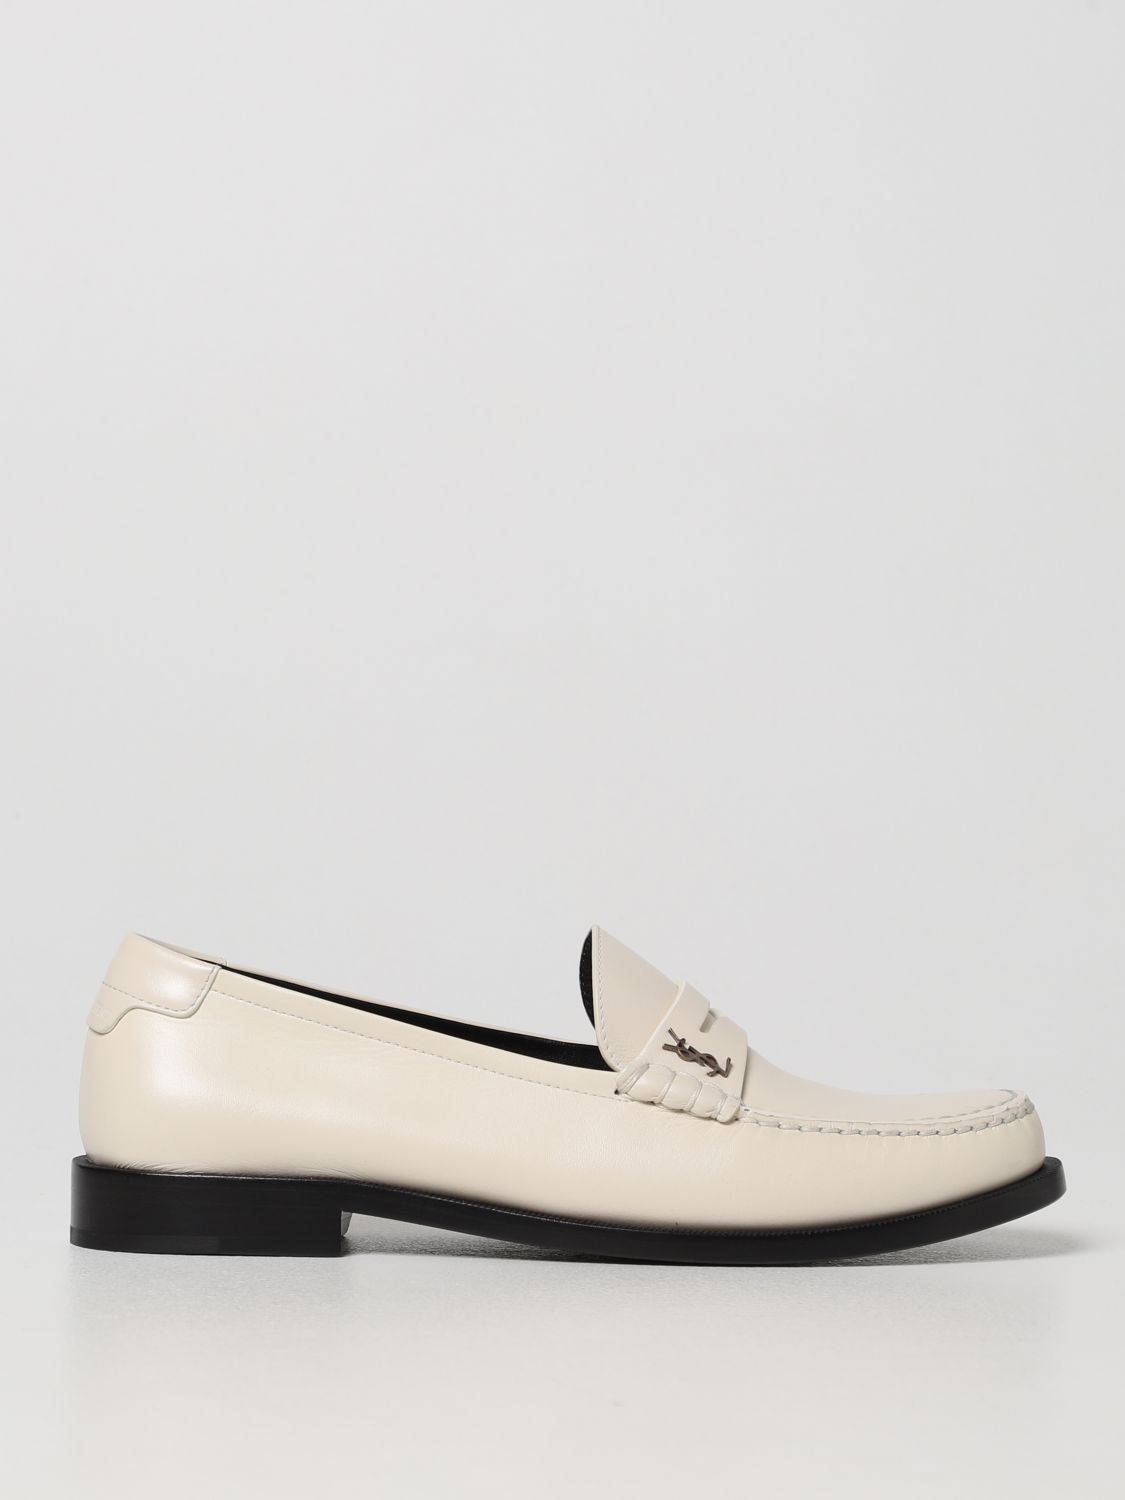 Saint Laurent leather loafers